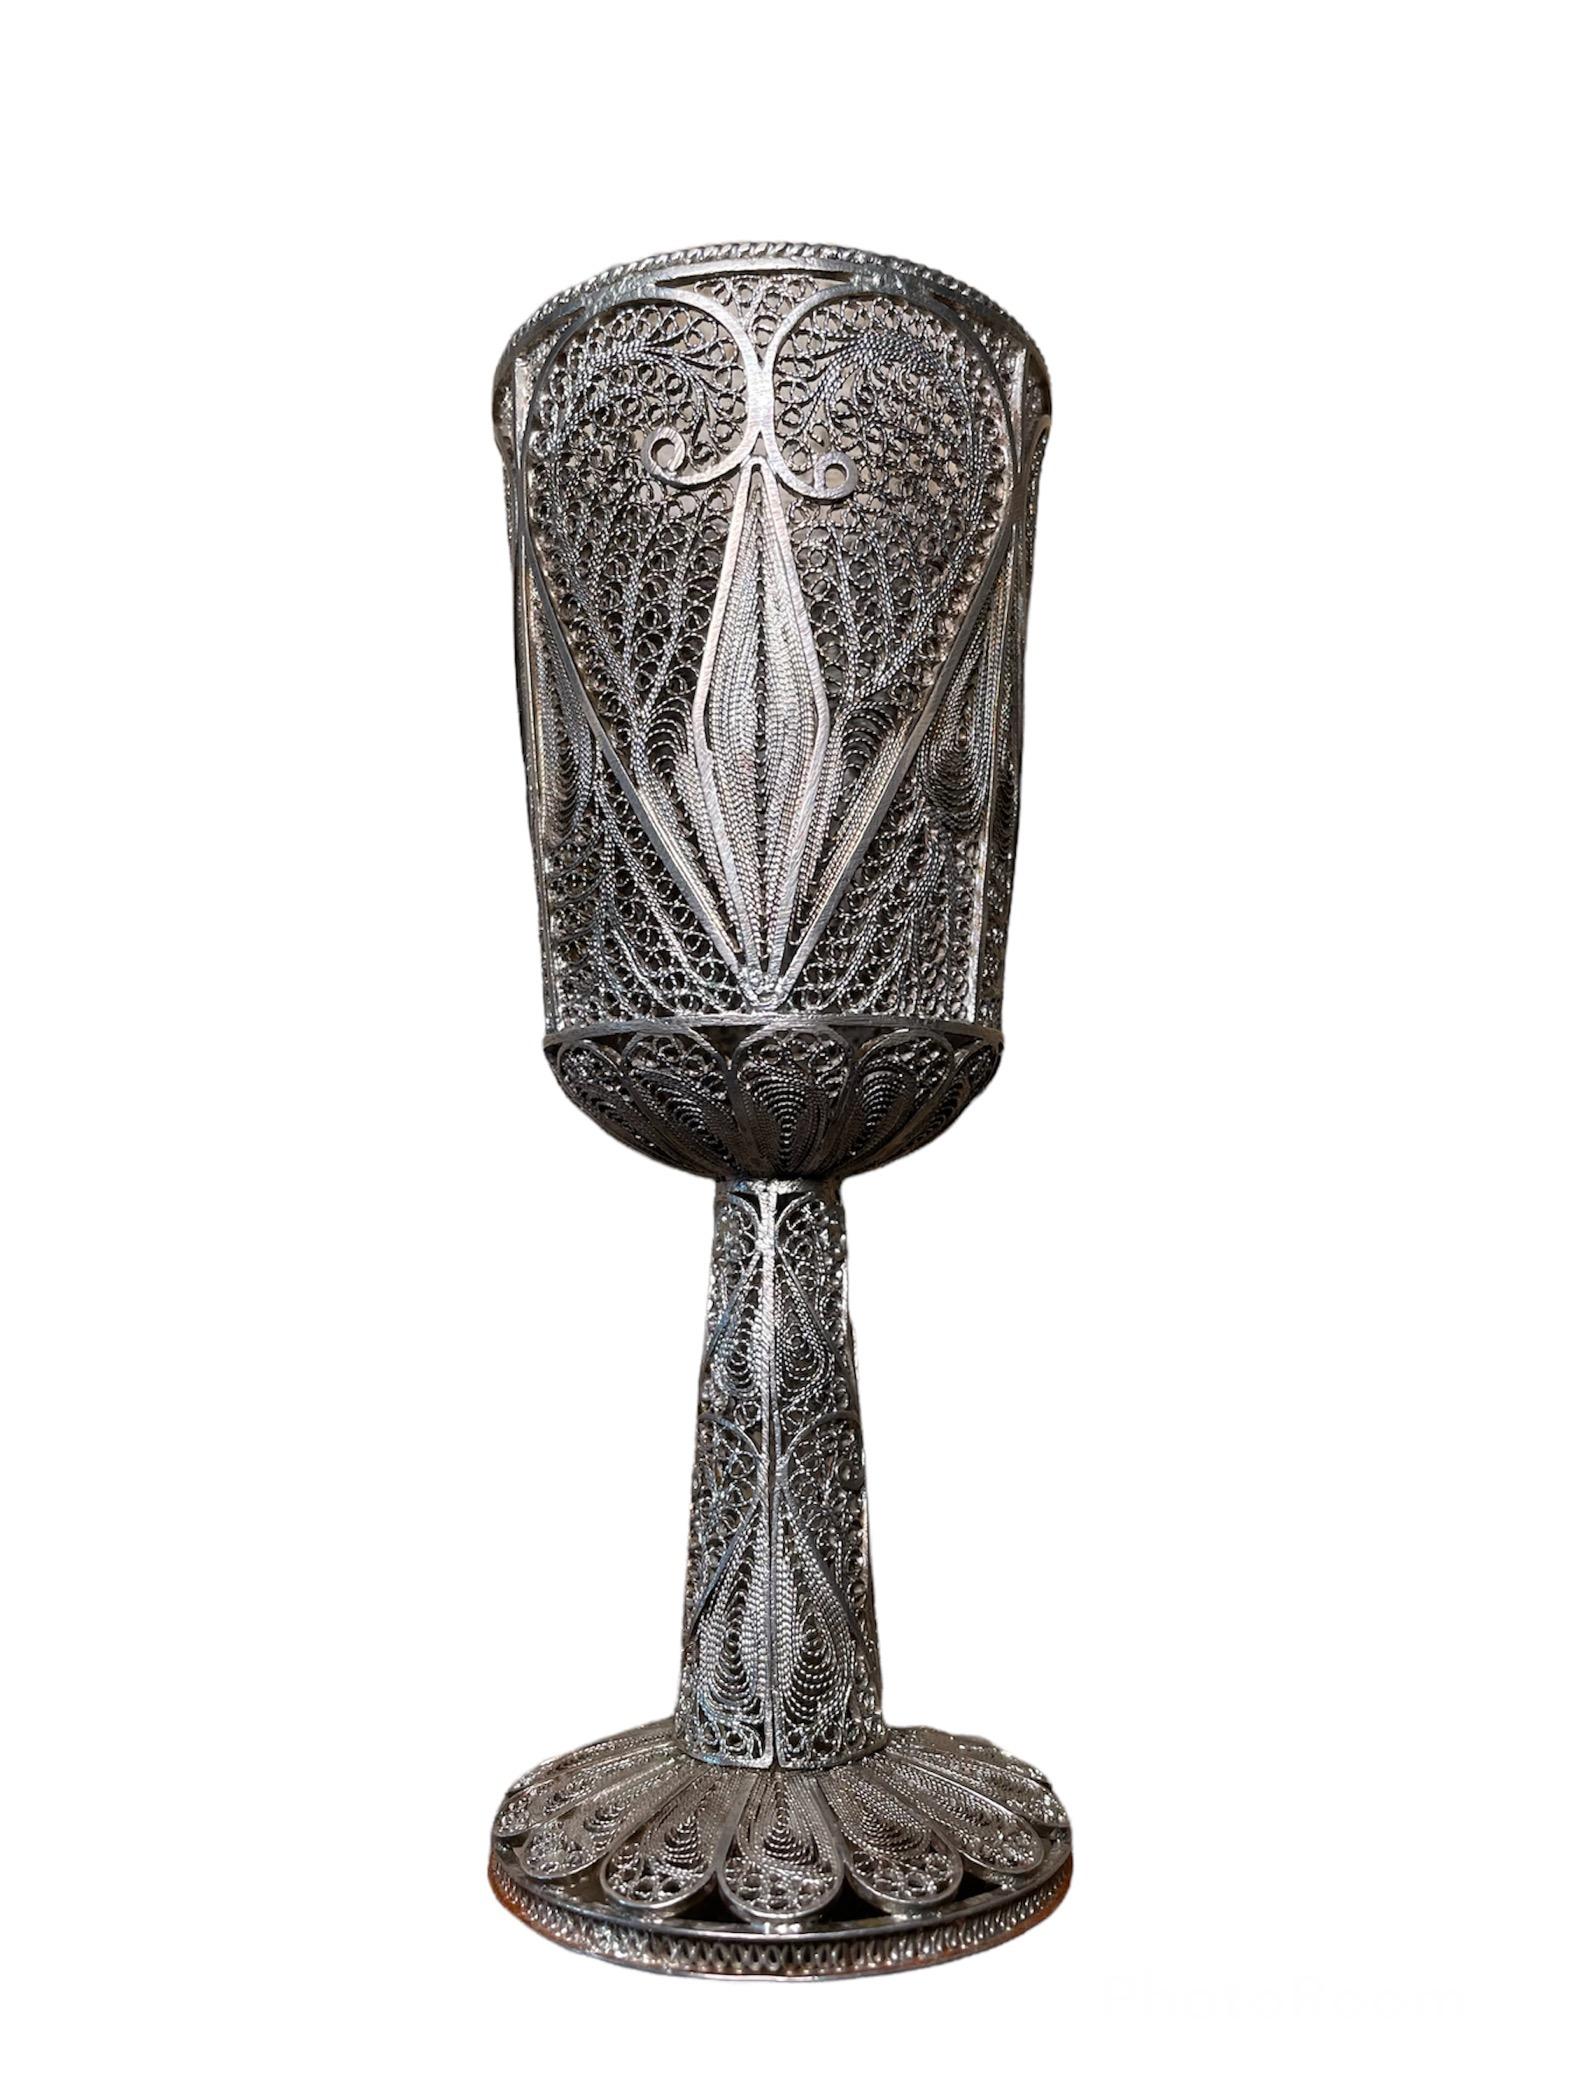 Art Deco Sterling Silver 925 Filigree Cup/Goblet For Sale 2